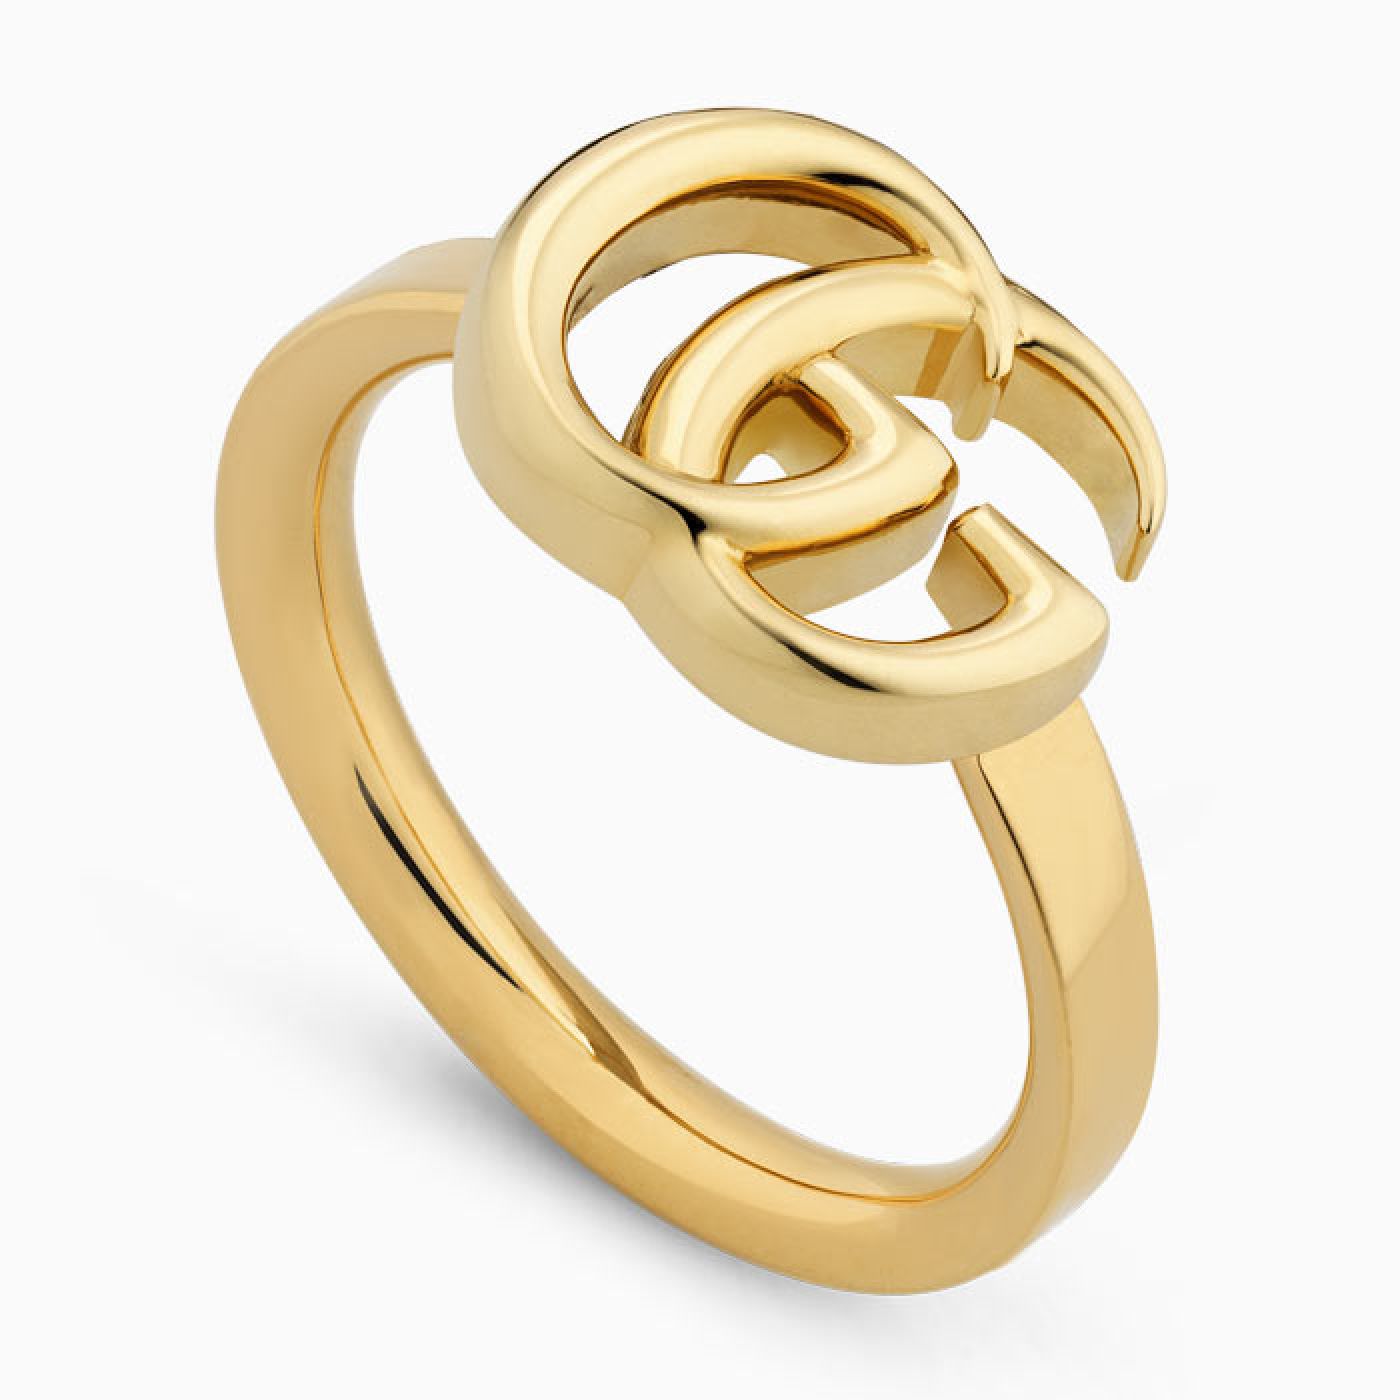 Gucci ring in yellow gold | RABAT Jewellery | P029100630-13